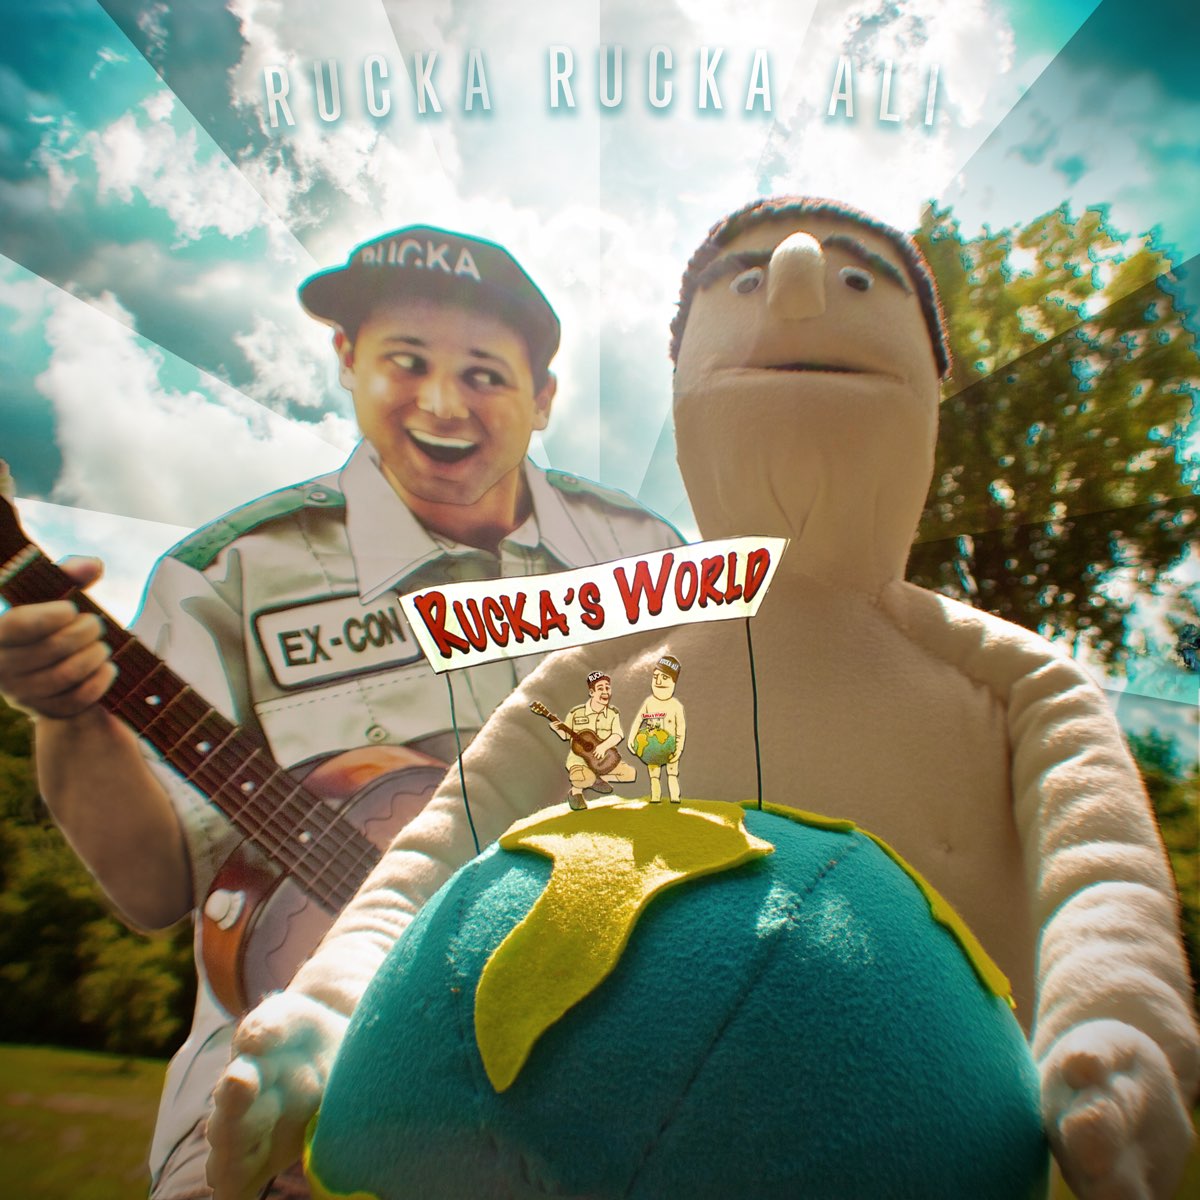 ‎rucka S World By Rucka Rucka Ali On Apple Music